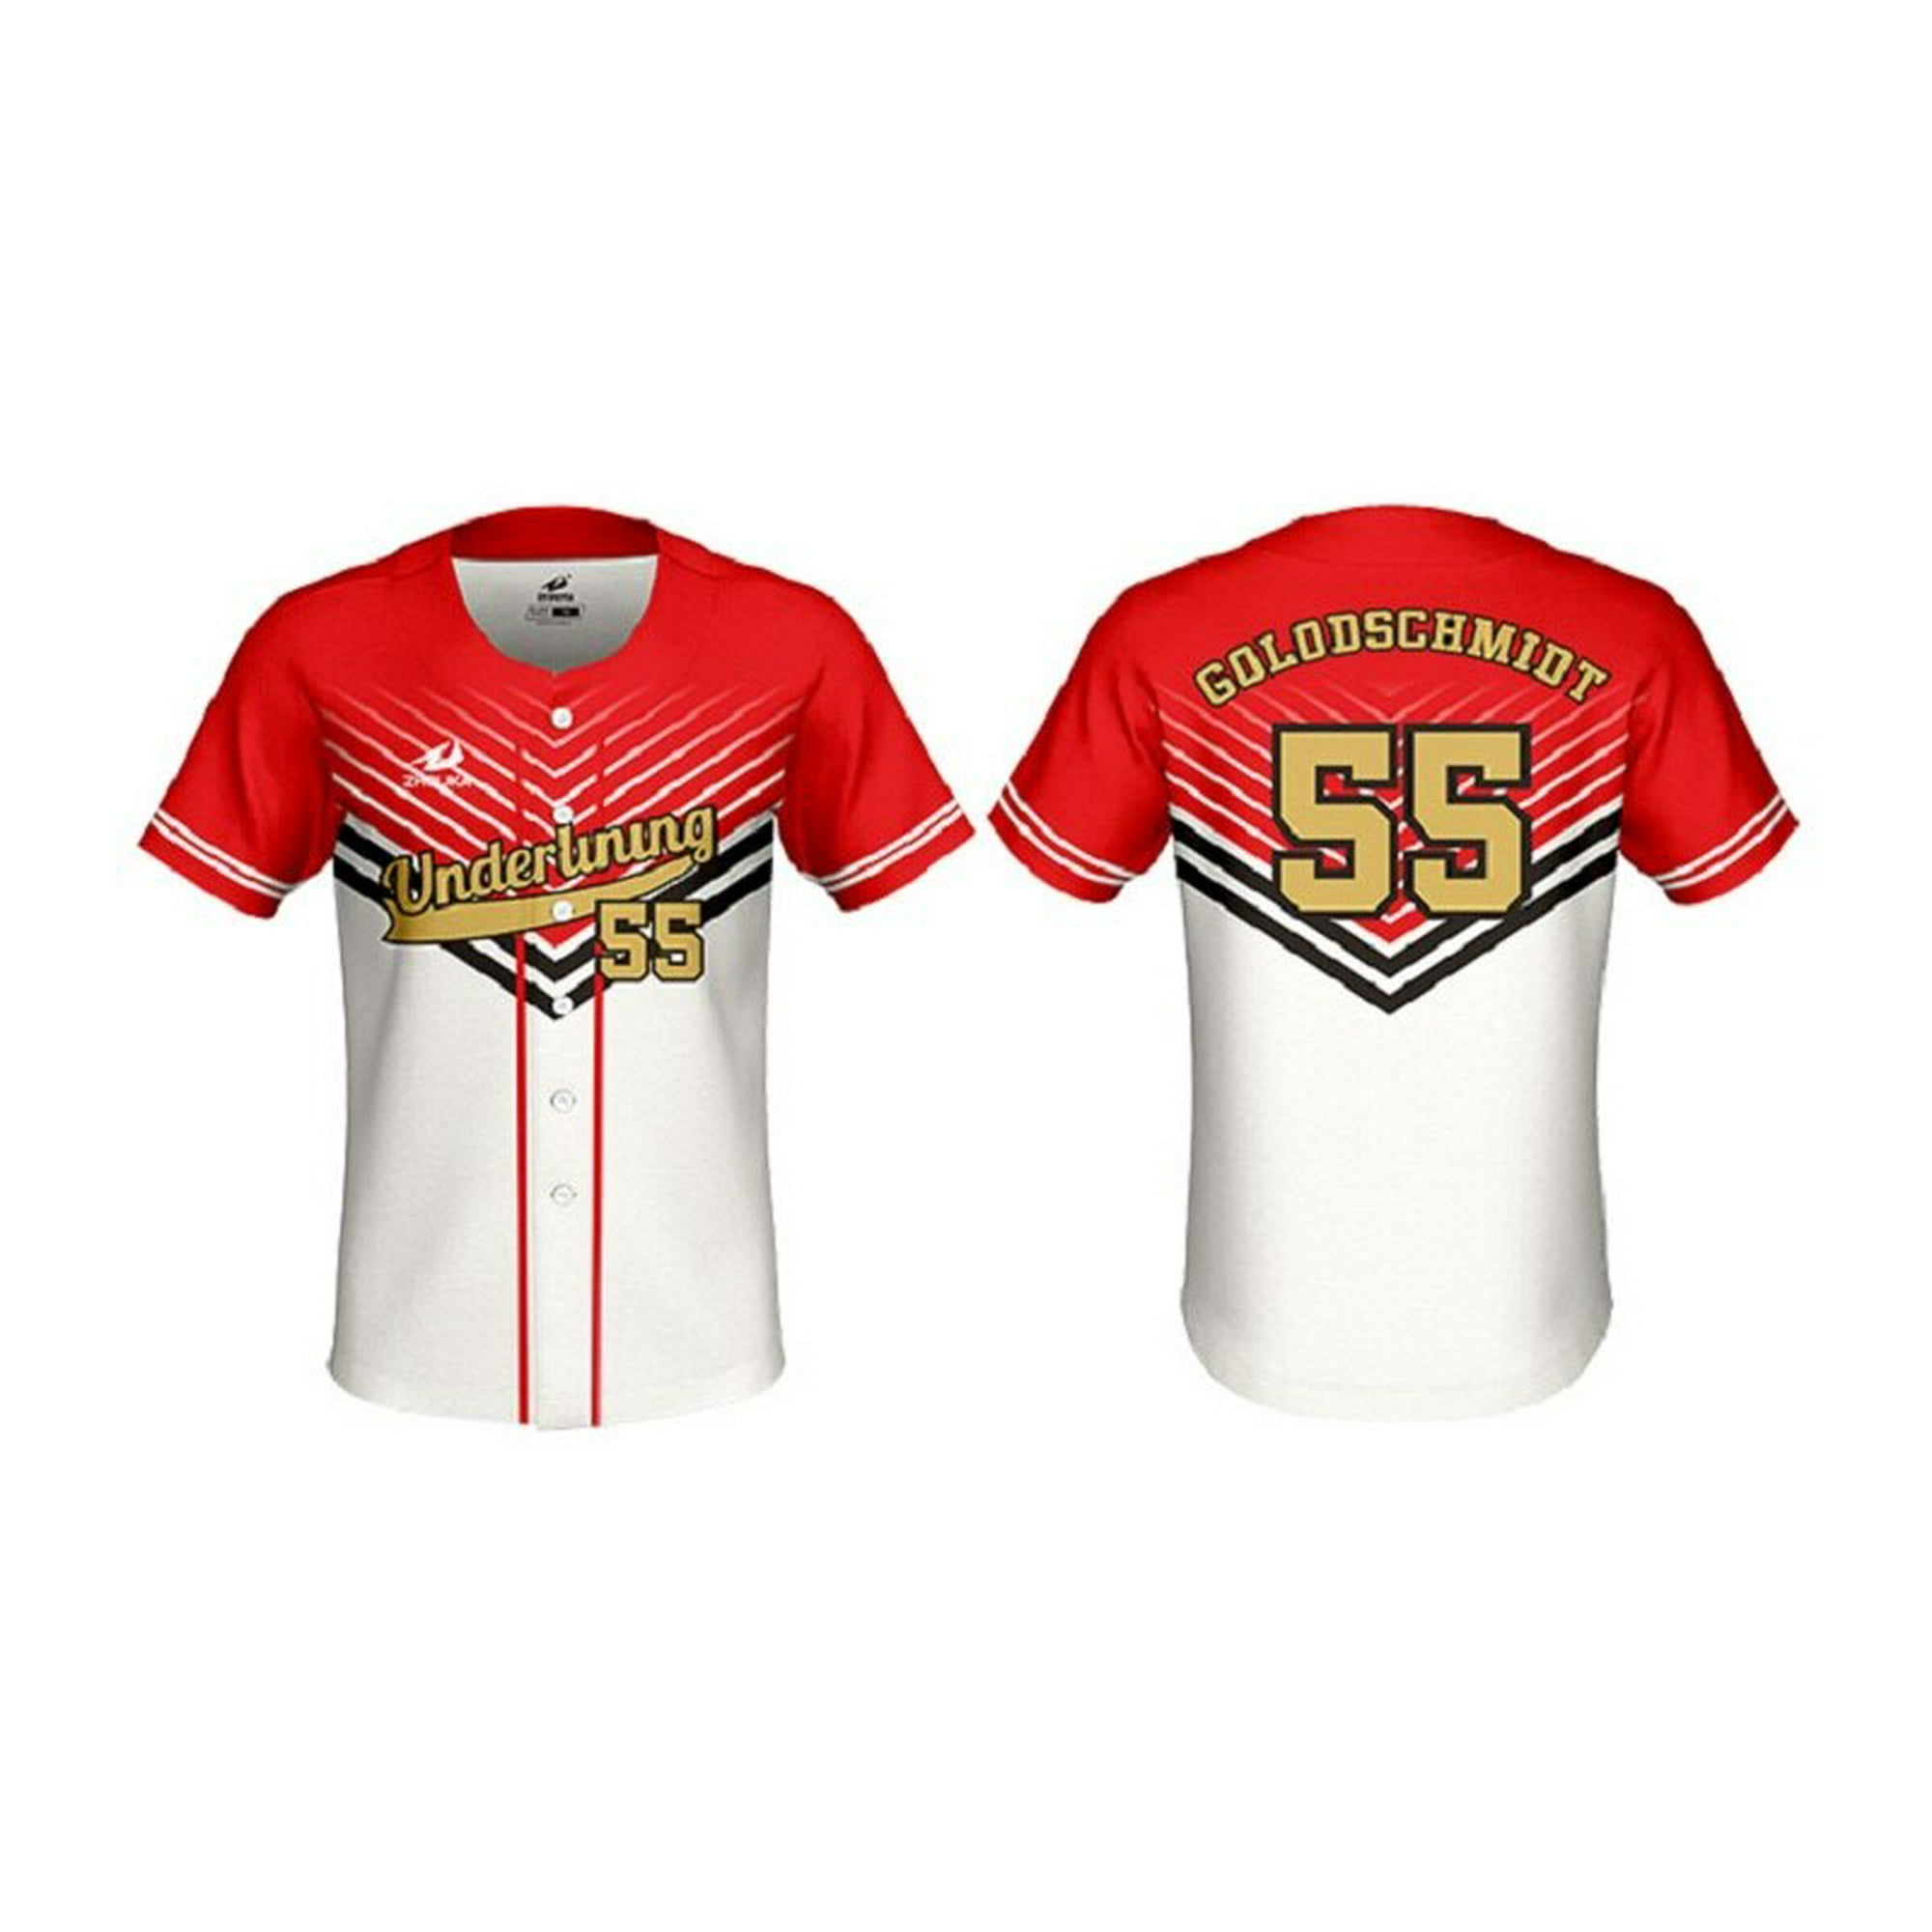 Camiseta de Beisbol para Hombre, Camisa de béisbol masculina de sublimación  personalizada, transpirable, más barataM Gao Jinjia LED